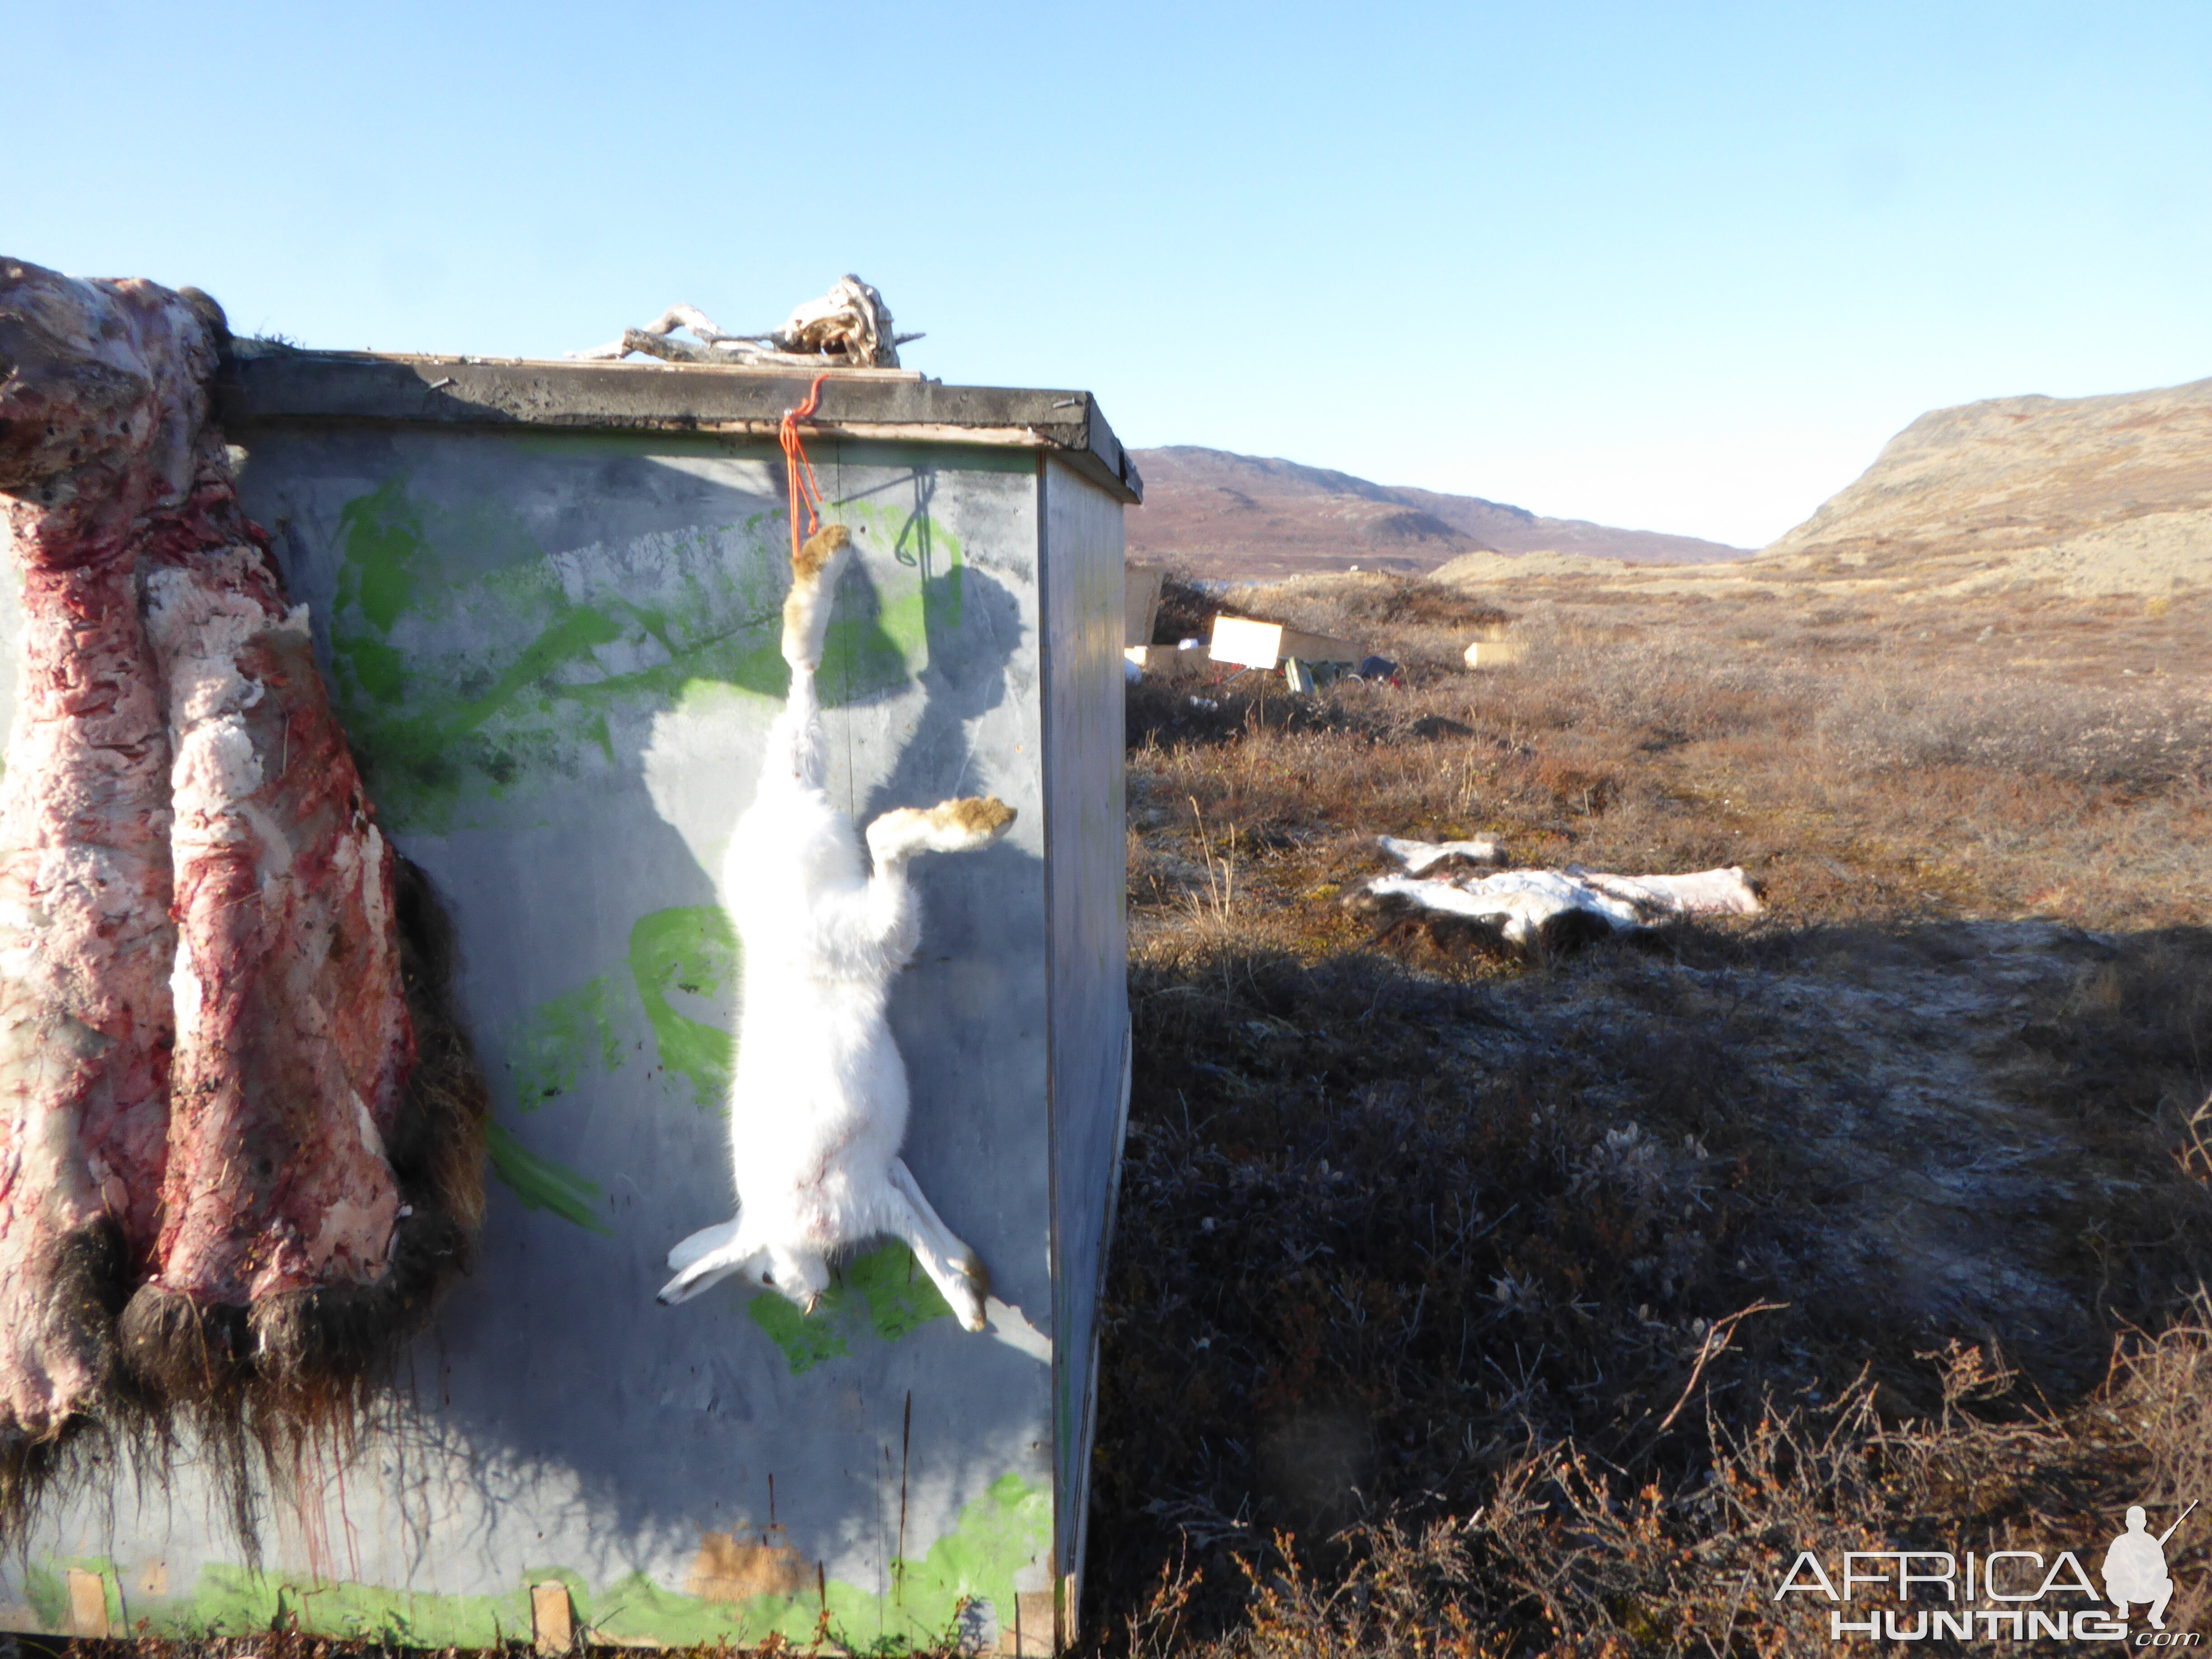 Hunting Rabbit in Greenland